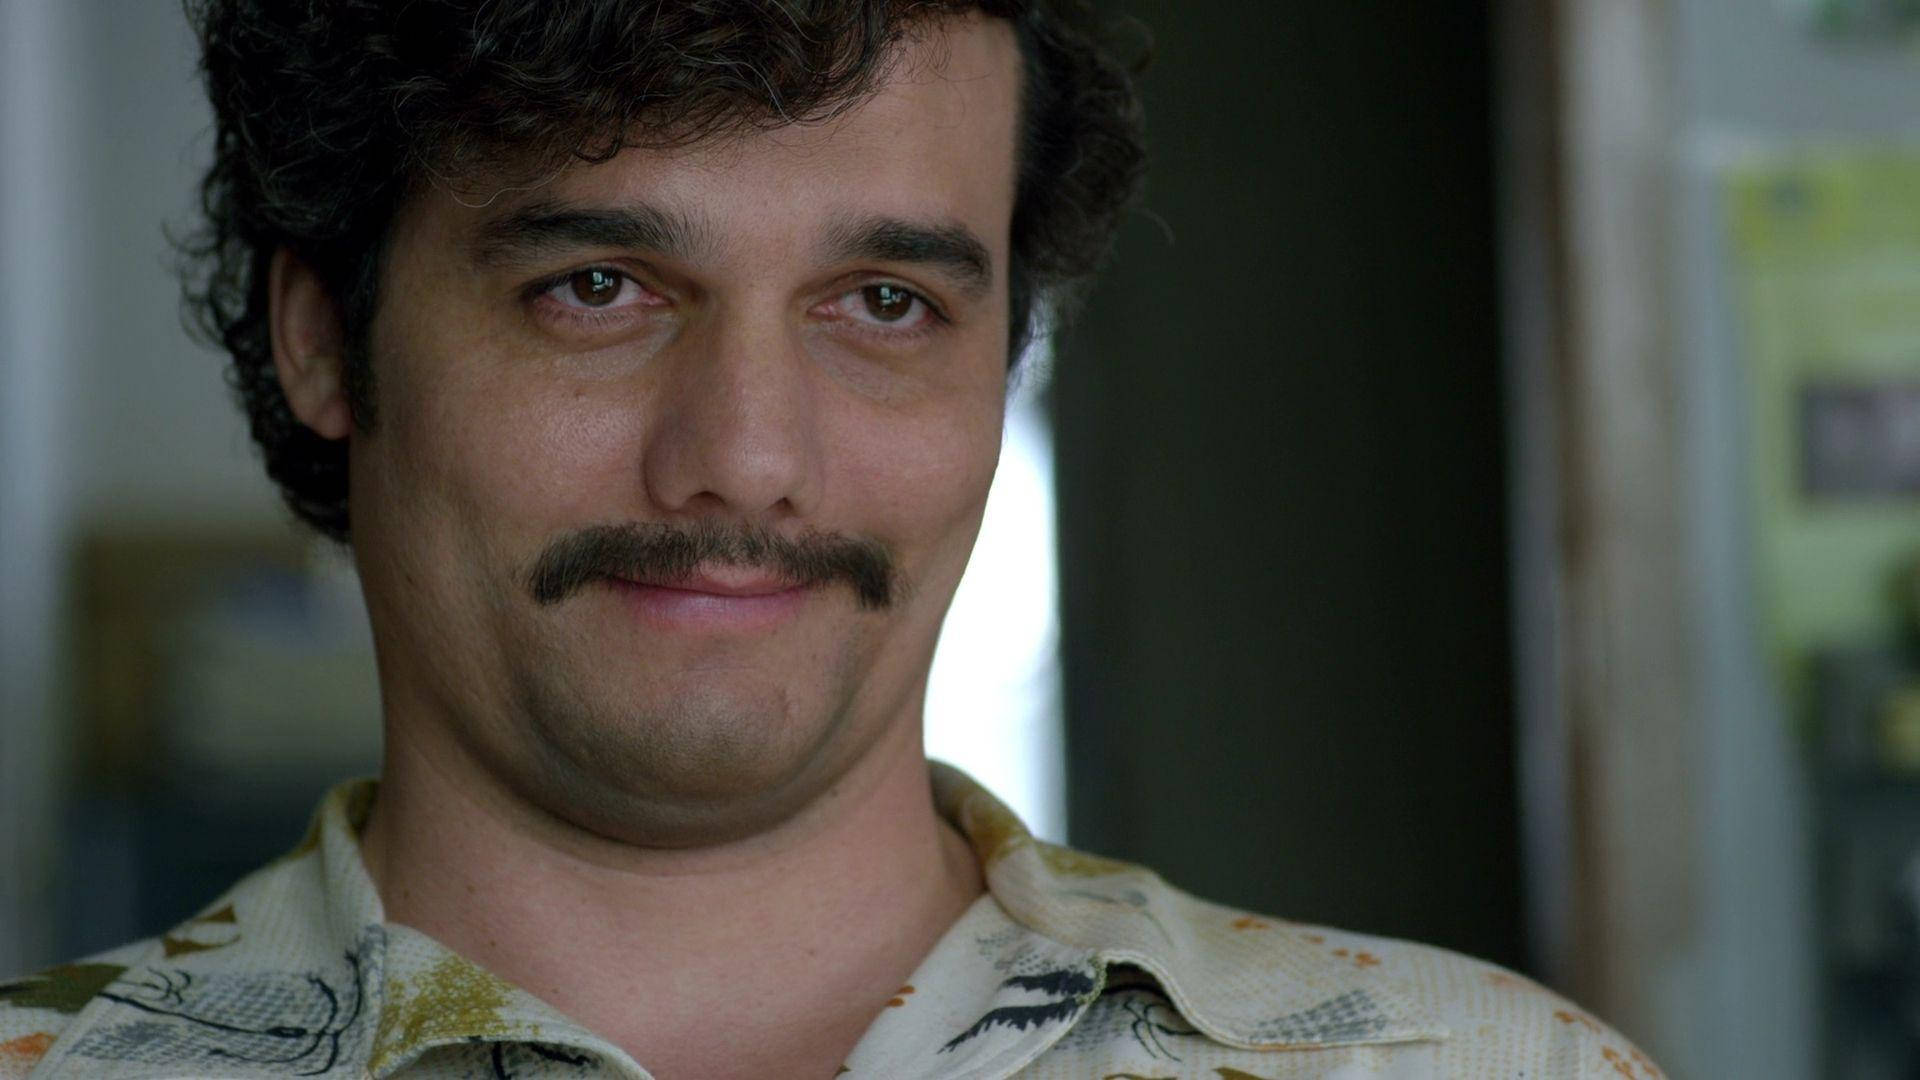 Intense gaze of Pablo Escobar, the infamous Narcos Kingpin Wallpaper